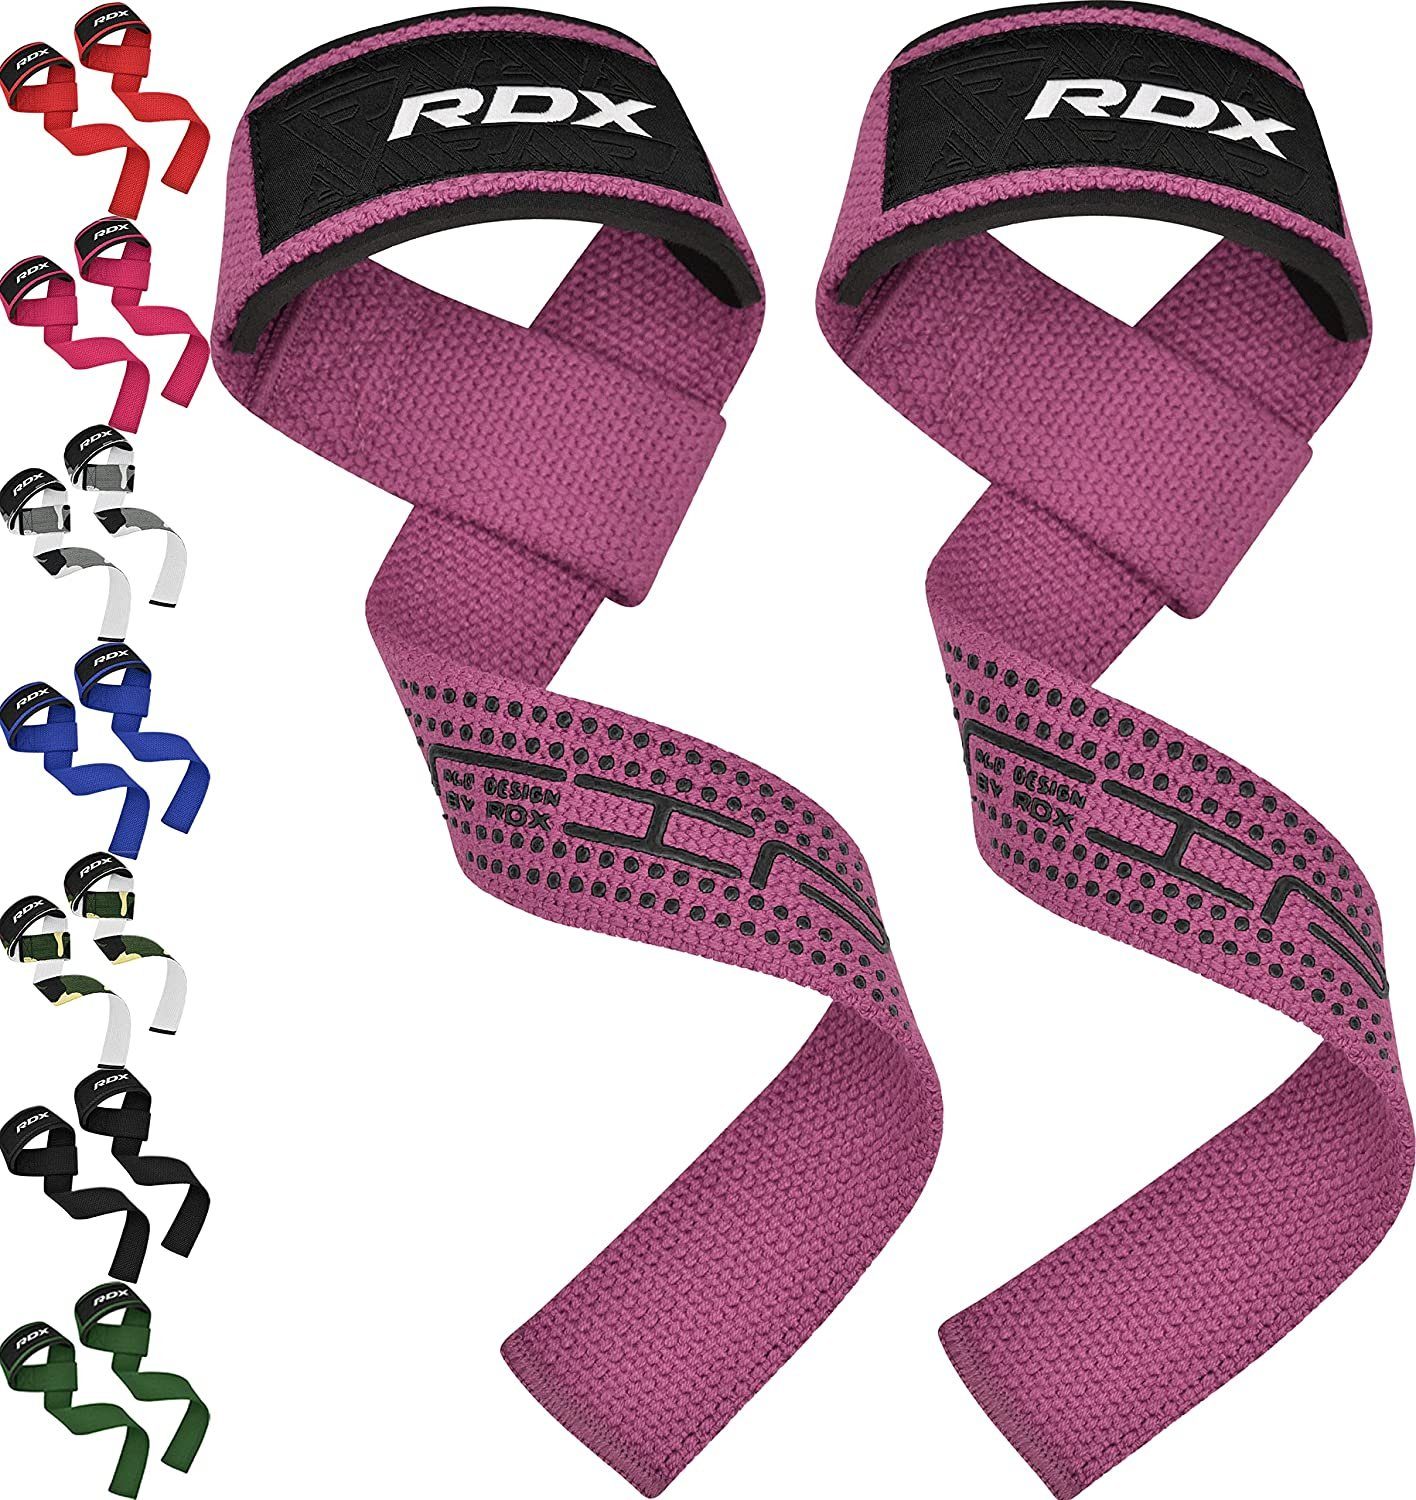 RDX Handgelenkschutz RDX Lifting Straps Strength Training, 60 cm lange professionelle Pink Dotted